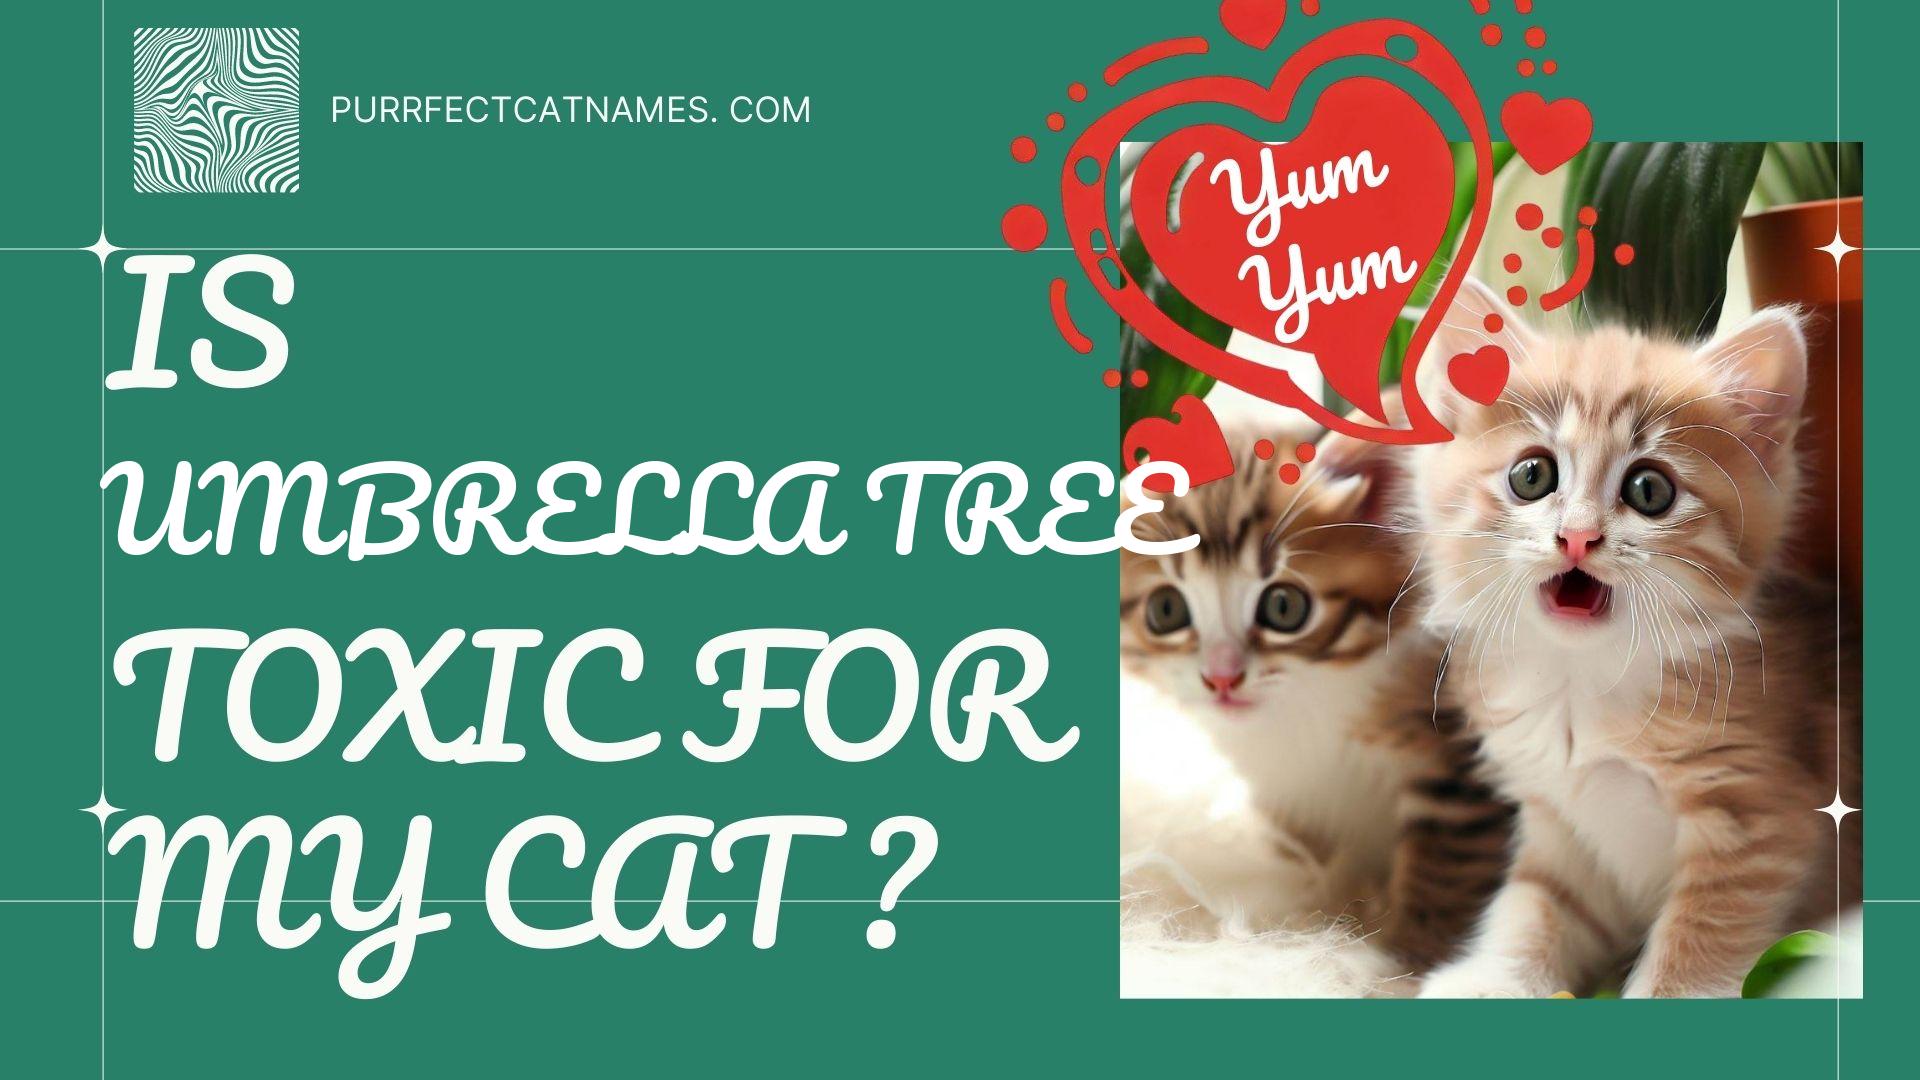 IsUmbrella Tree plant toxic for your cat